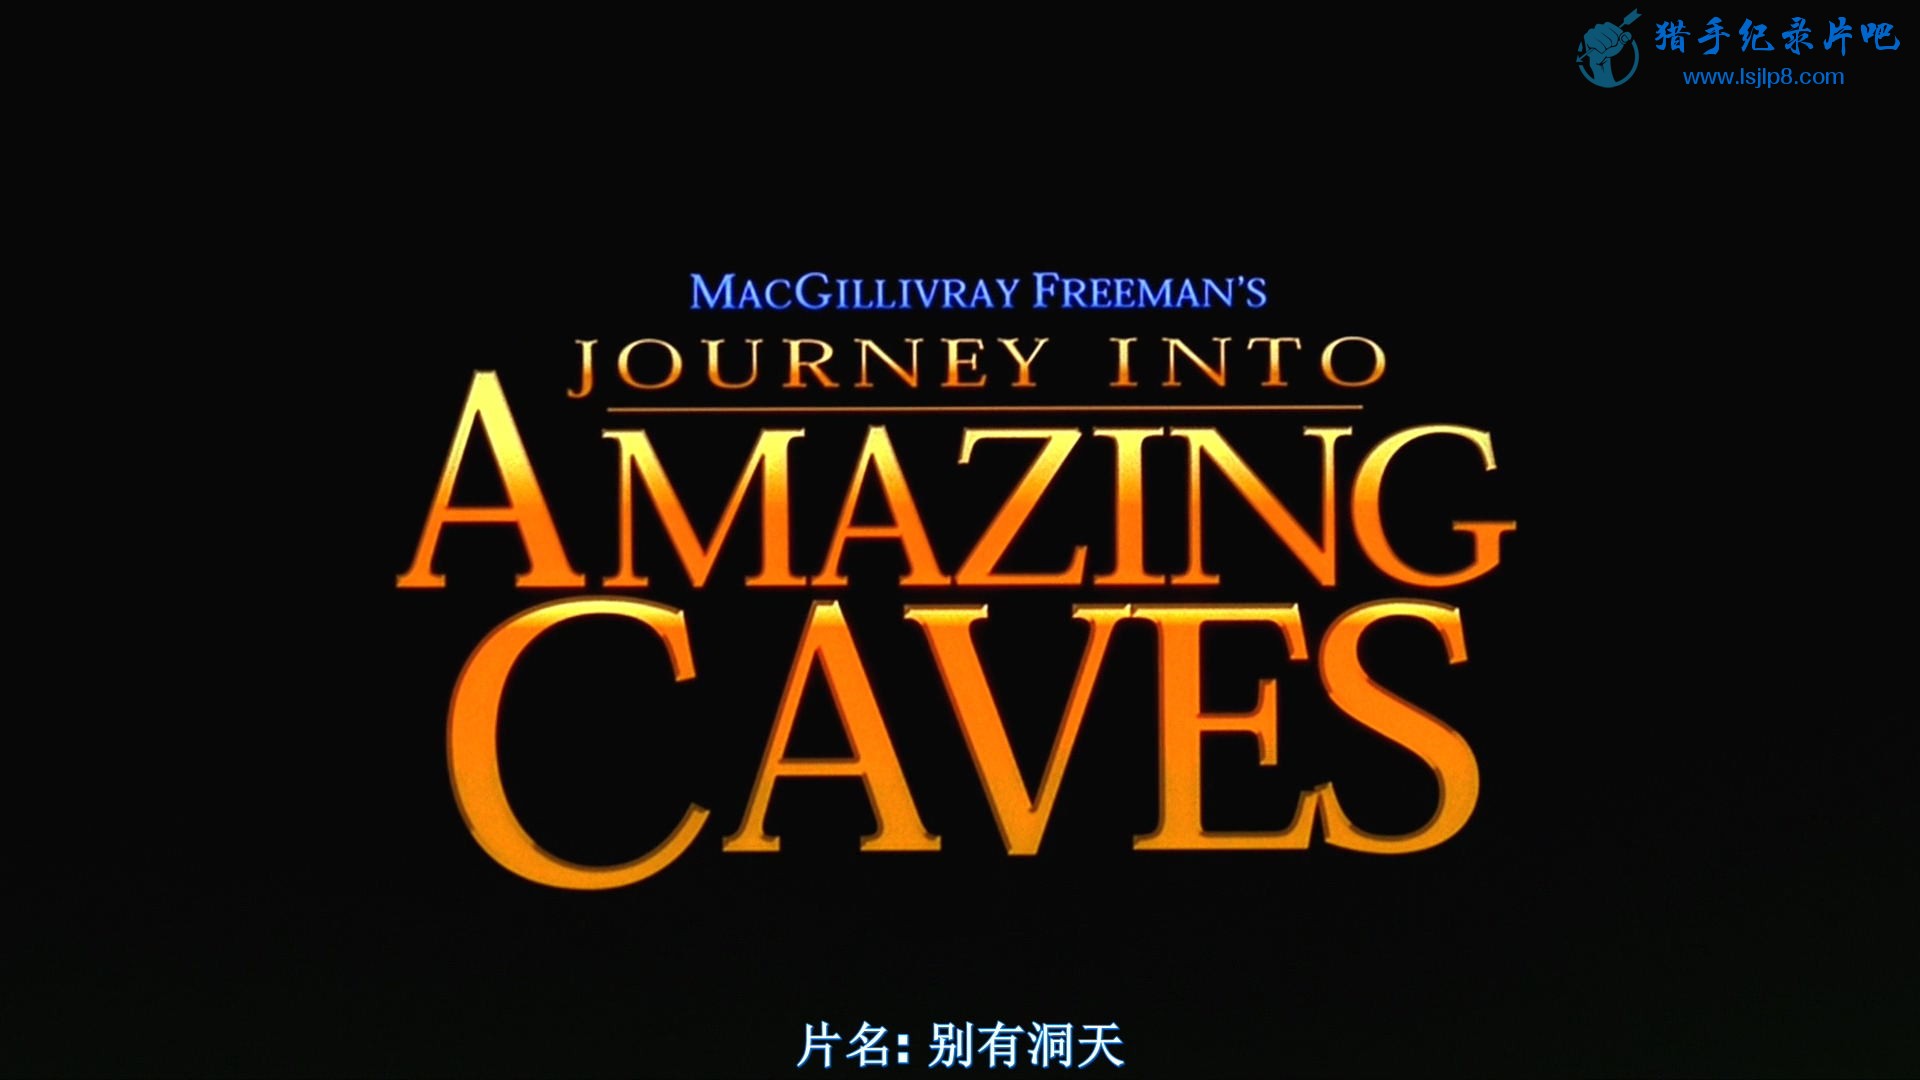 IMAX.Journey.Into.Amazing.Caves.2001.Bluray.1080p.DTS.Audio.x264-CHD.mkv_2020050.jpg